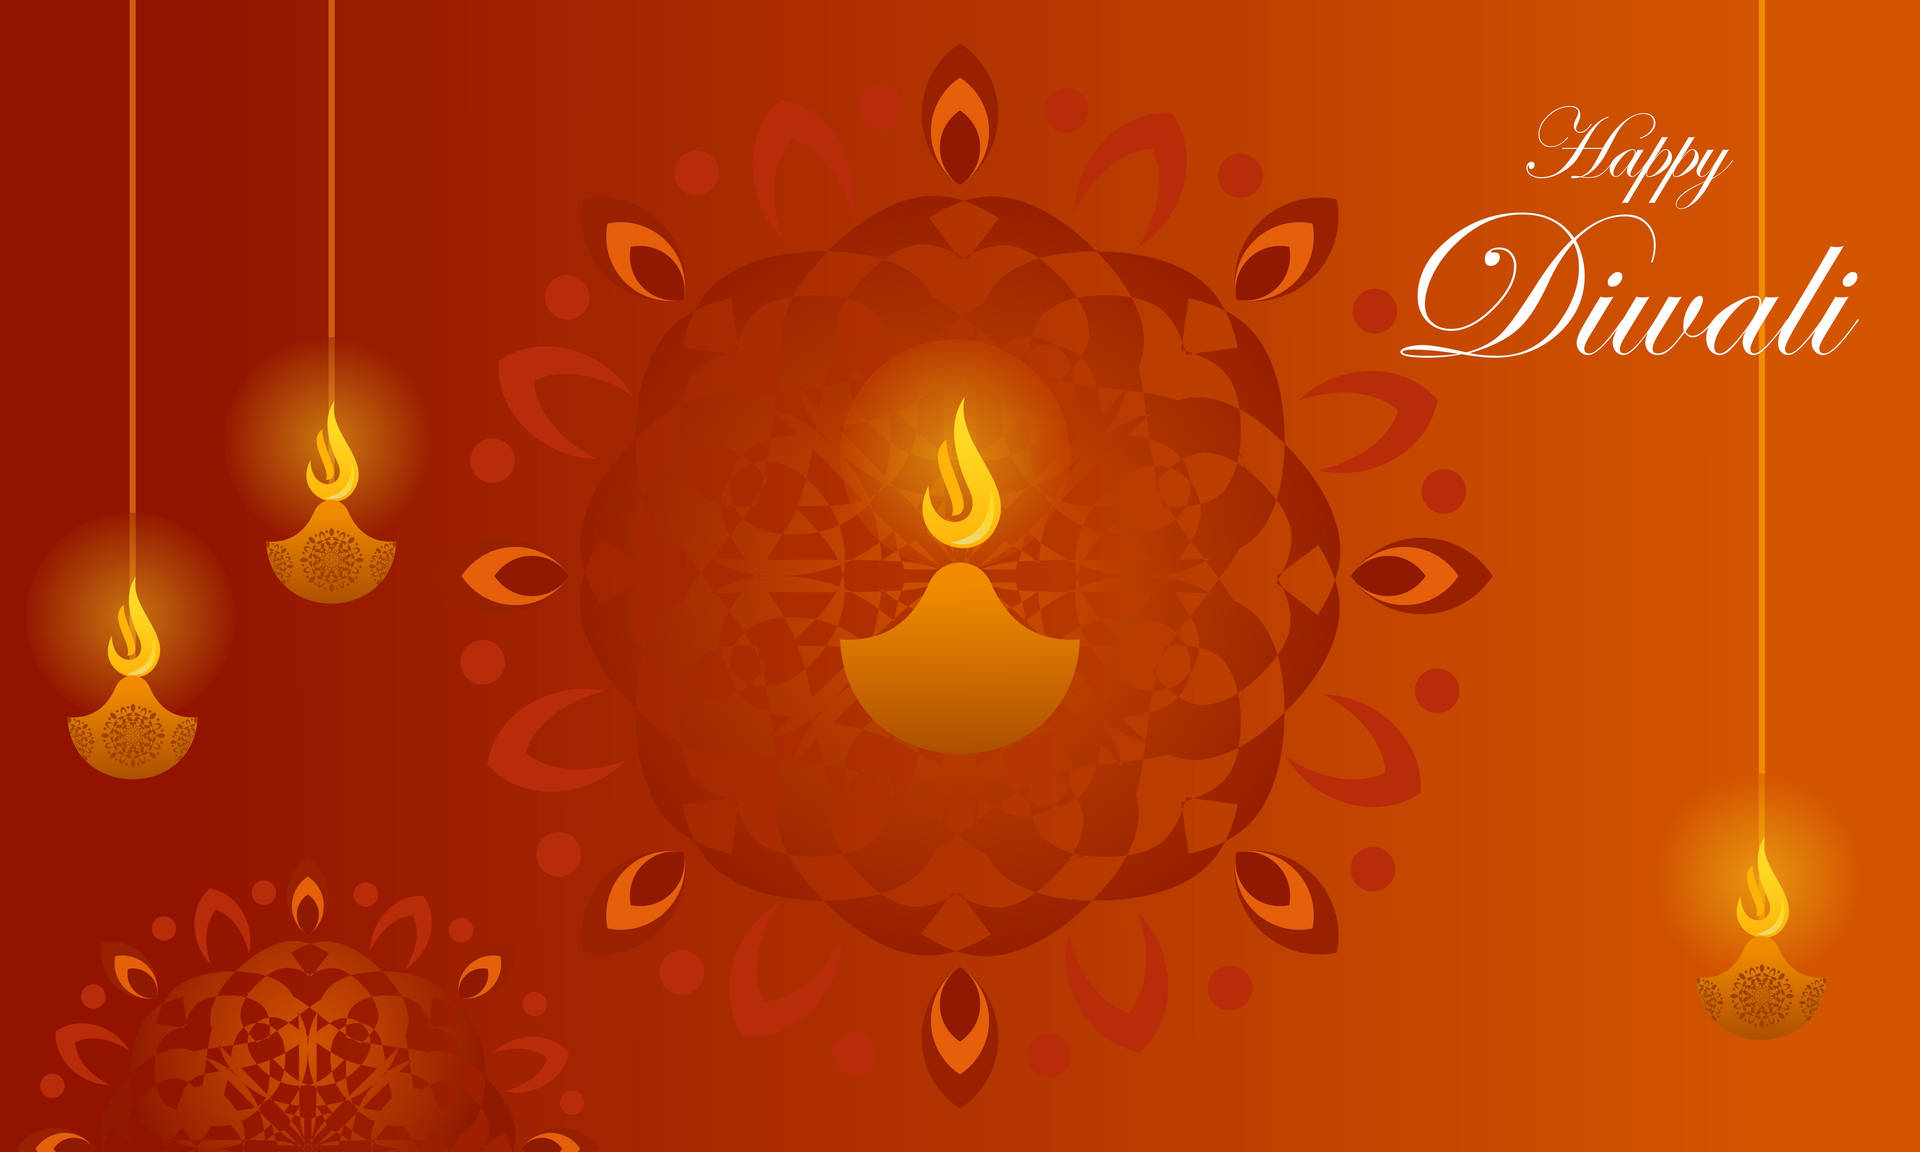 Happy Diwali Orange Oil Lamps Background